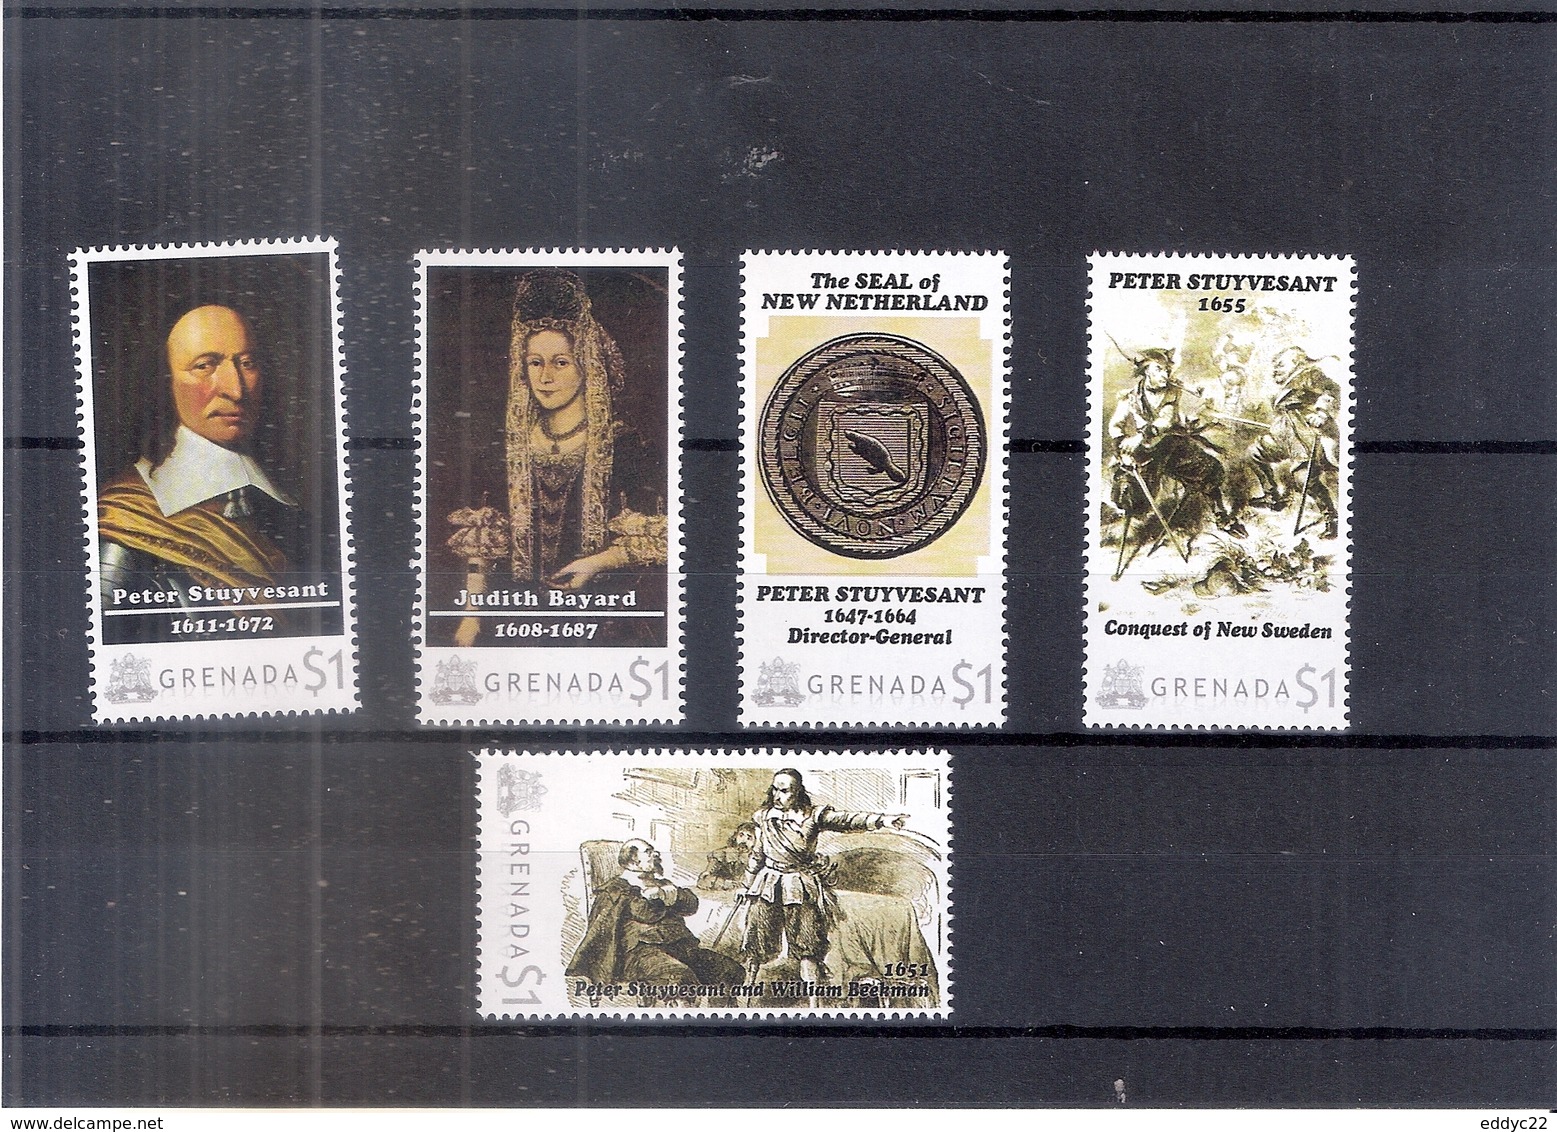 Peter Stuyvesant Gouvernor Of New-Nederland - Grenada 2000 - Complete Set ( To See) - Onafhankelijkheid USA